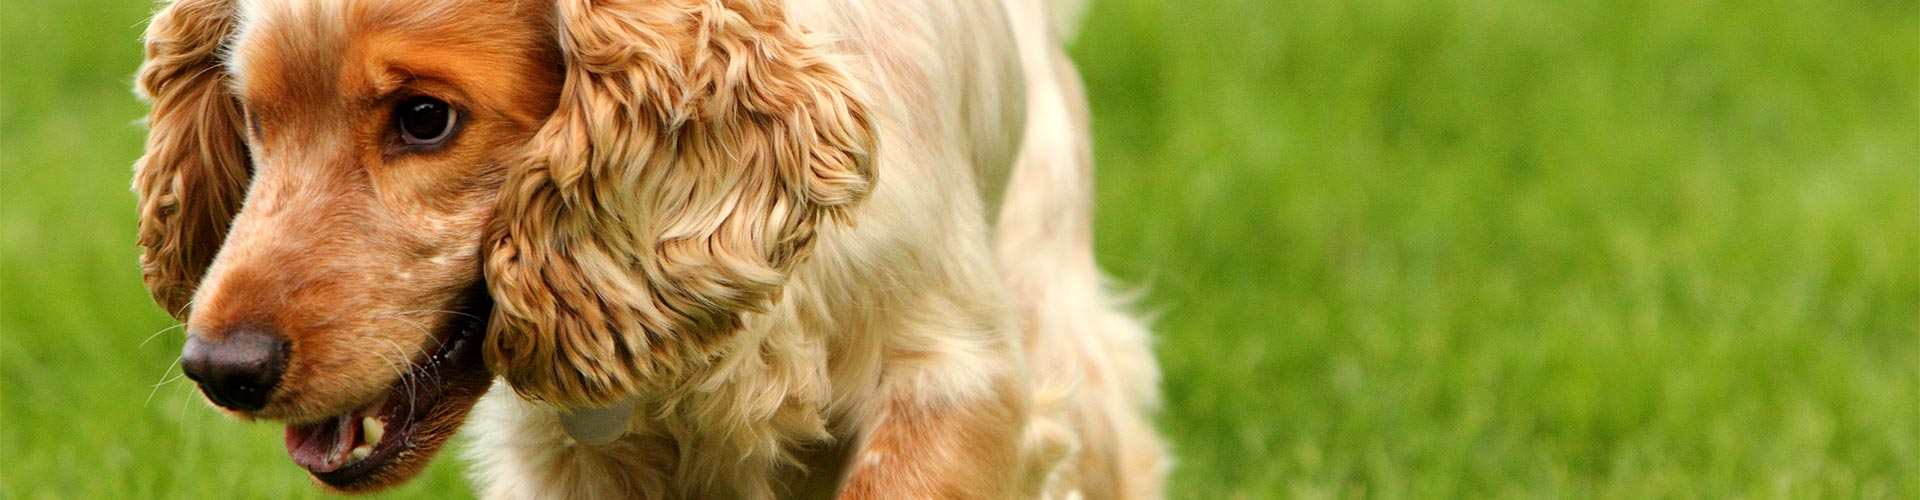 Casas rurales que admiten perros en A Reigosa